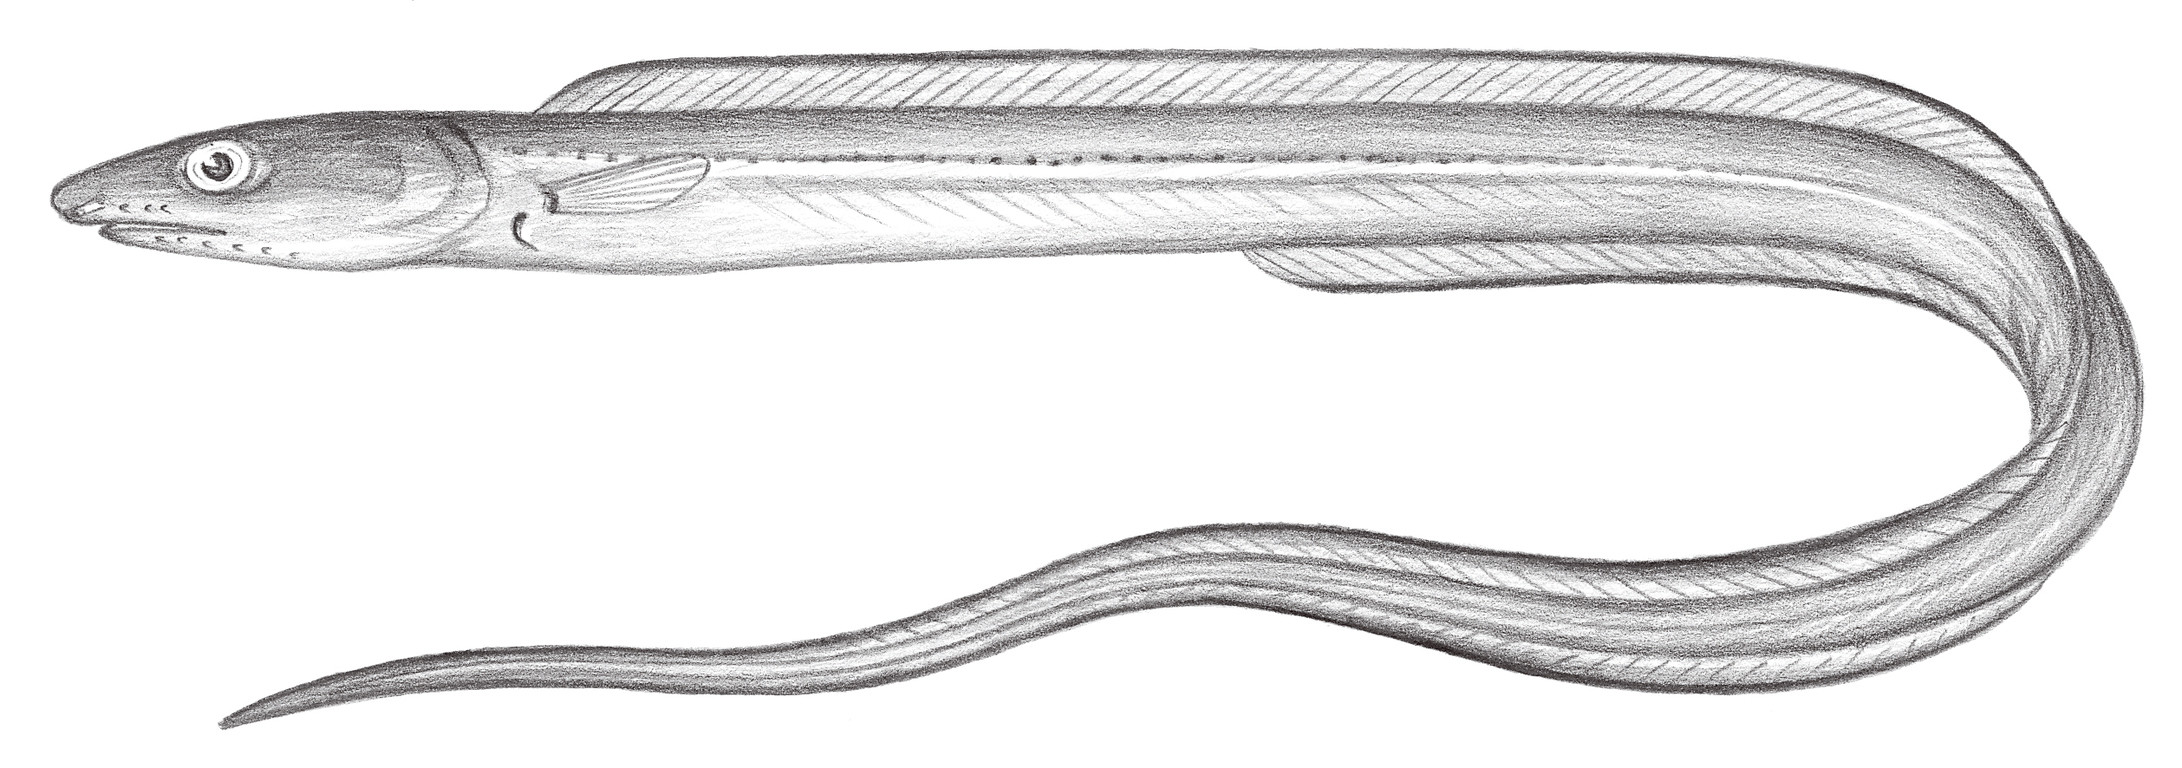 277.	短吻纖尾糯鰻 Rhynchoconger ectenurus (Jordan & Richardson, 1909)